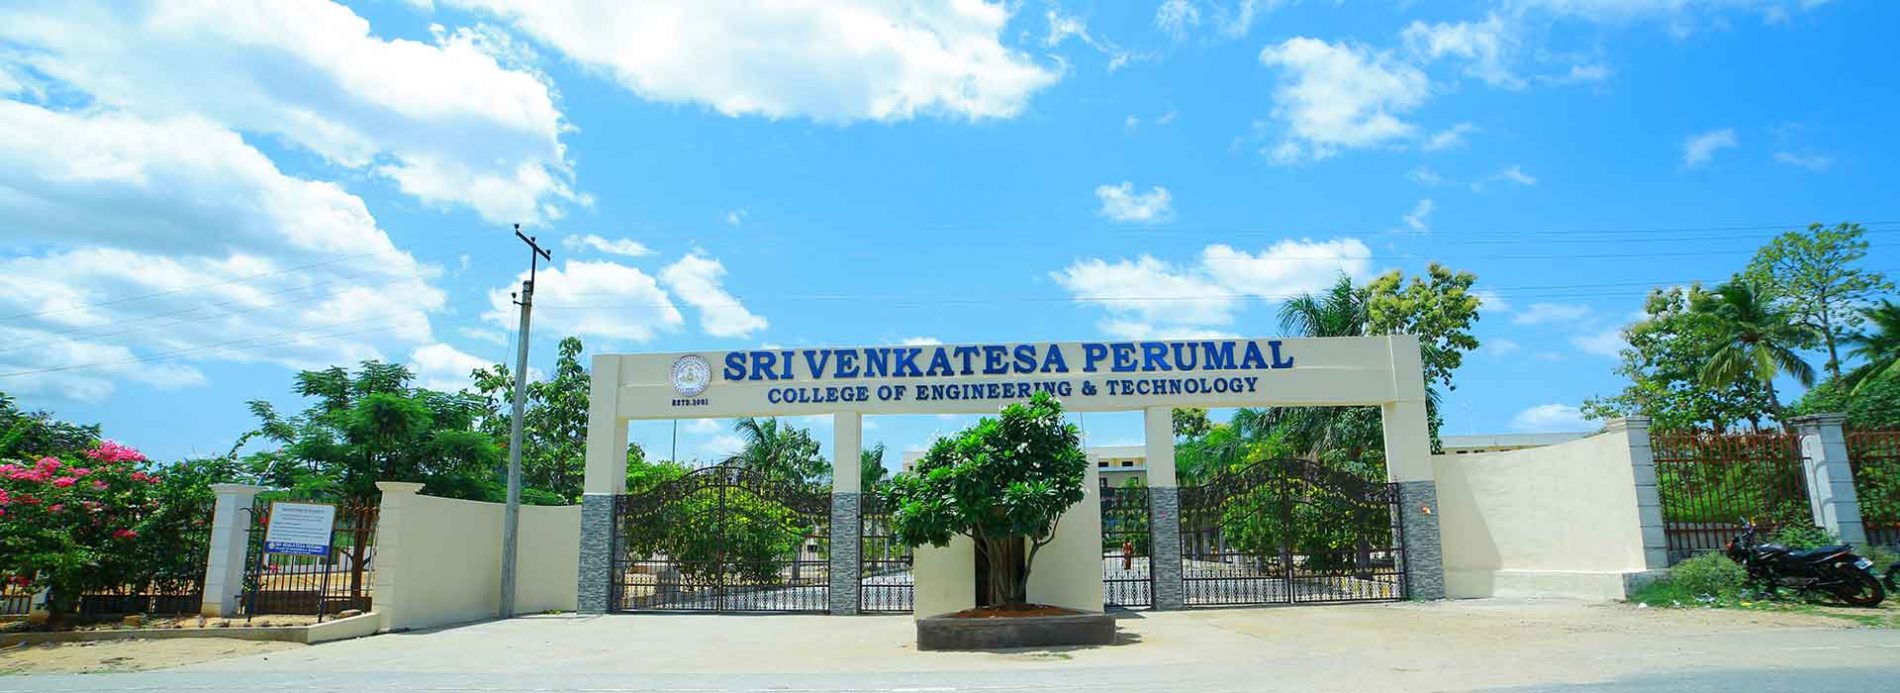 Sri Venkatesa Perumal College of Engineering & Technology